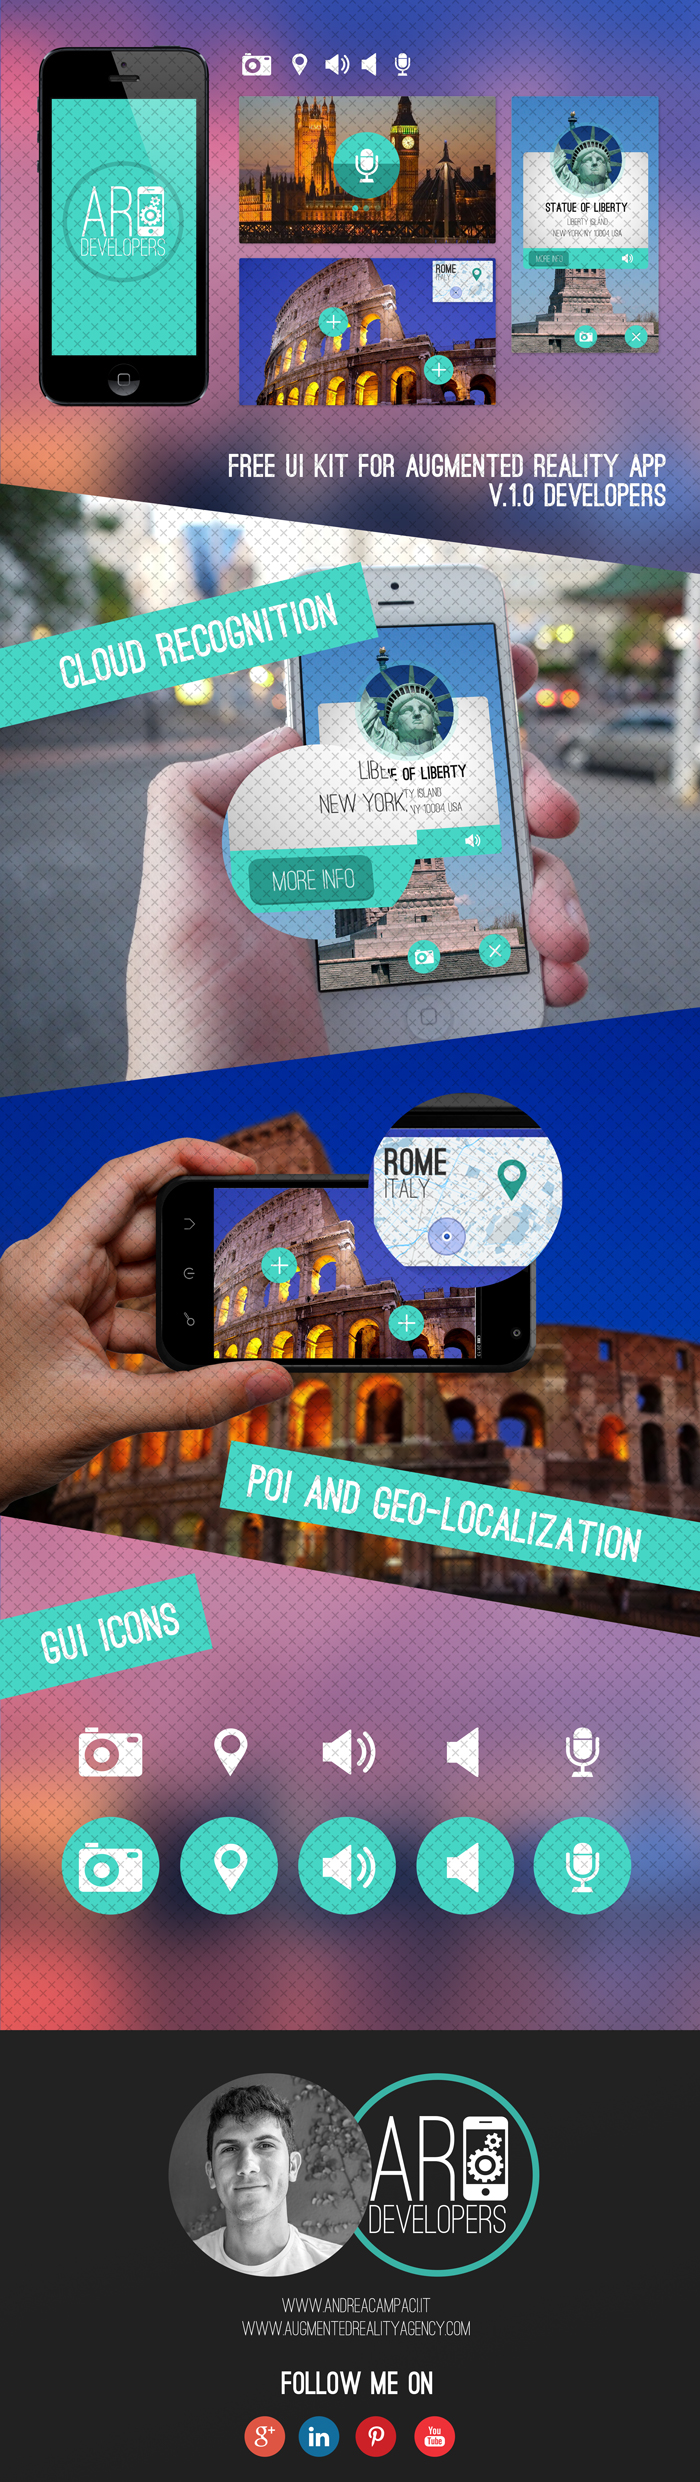 augmentedreality augmentedrealitydesign UI design Appdesign app ui design UX design Virtual reality mentaio Layar photoshop Web maps gui icon